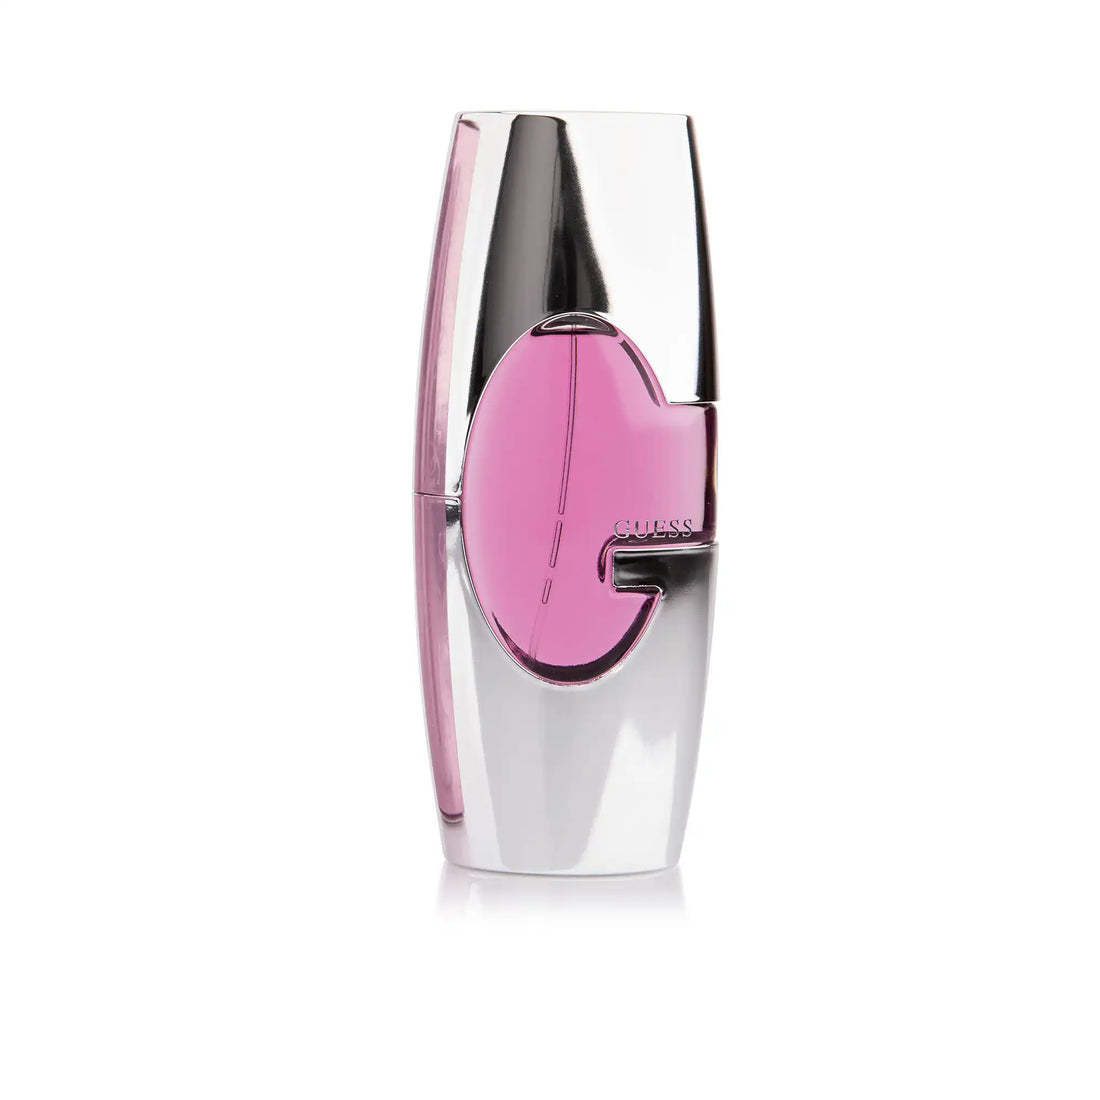 Guess for Women Eau de Parfum Spray 75ml